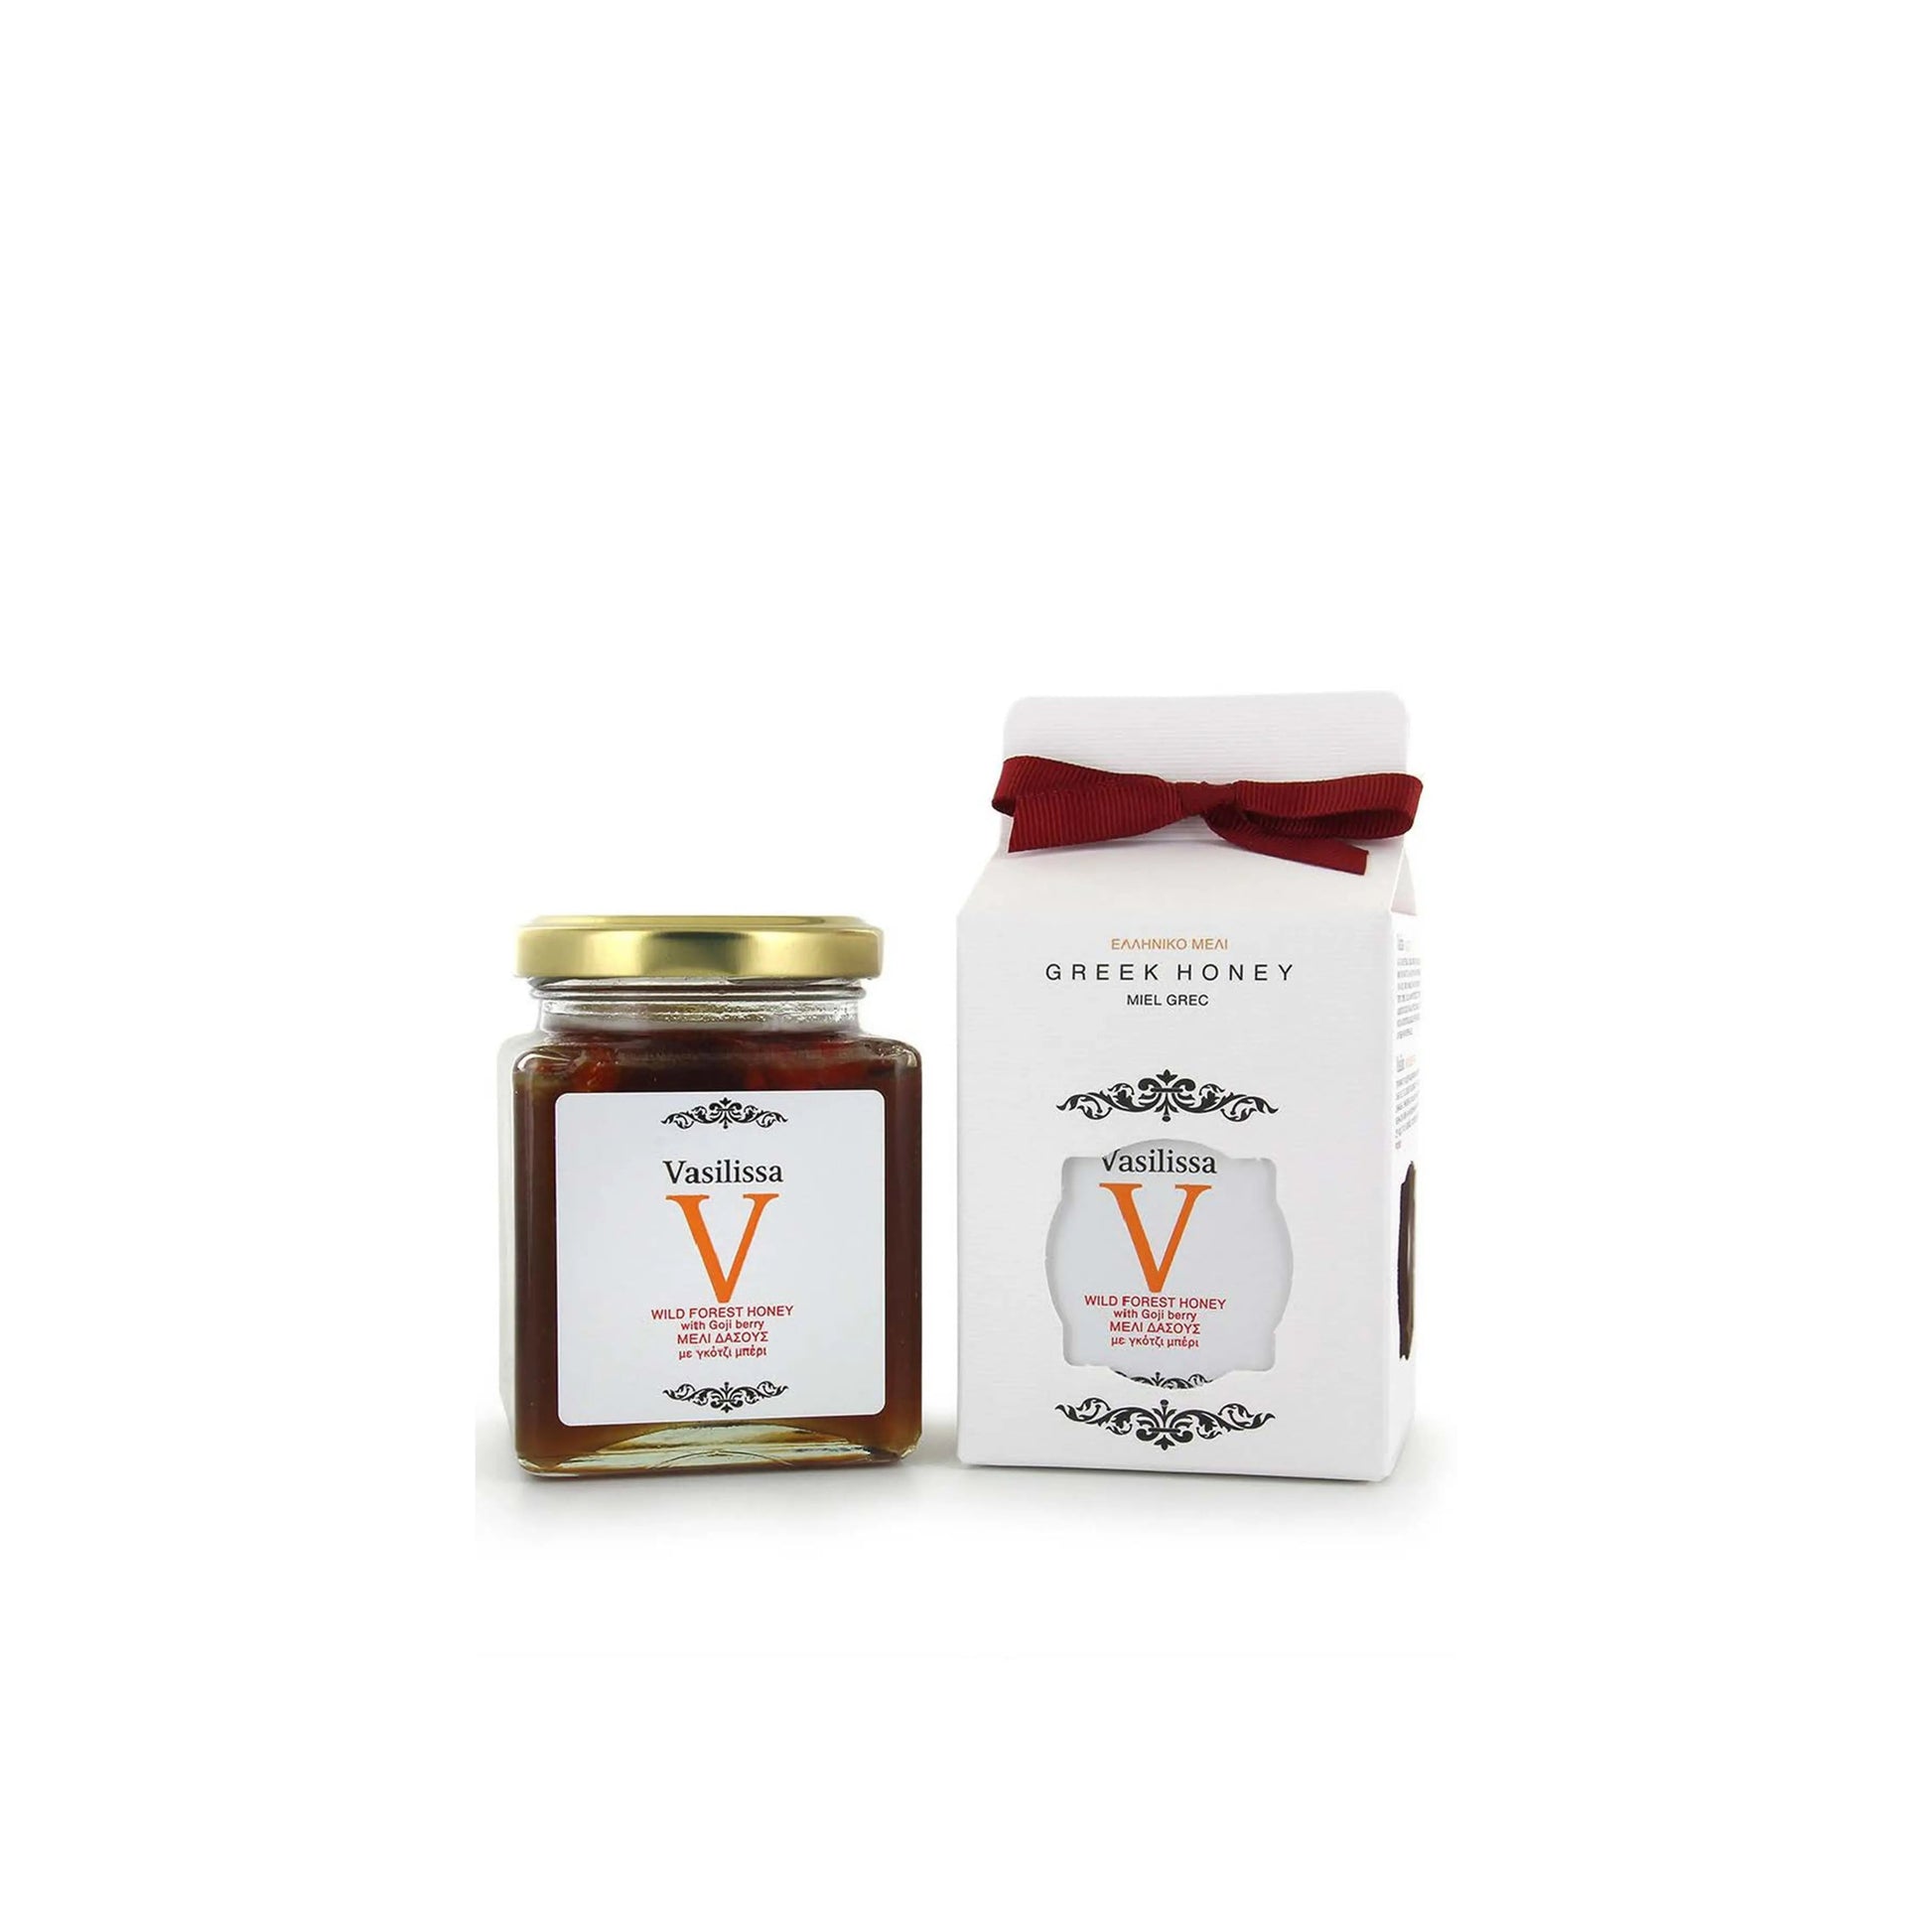 Honing met goji bes Griekenland 250g Vasilissa (vloeibaar) - Honingwinkel